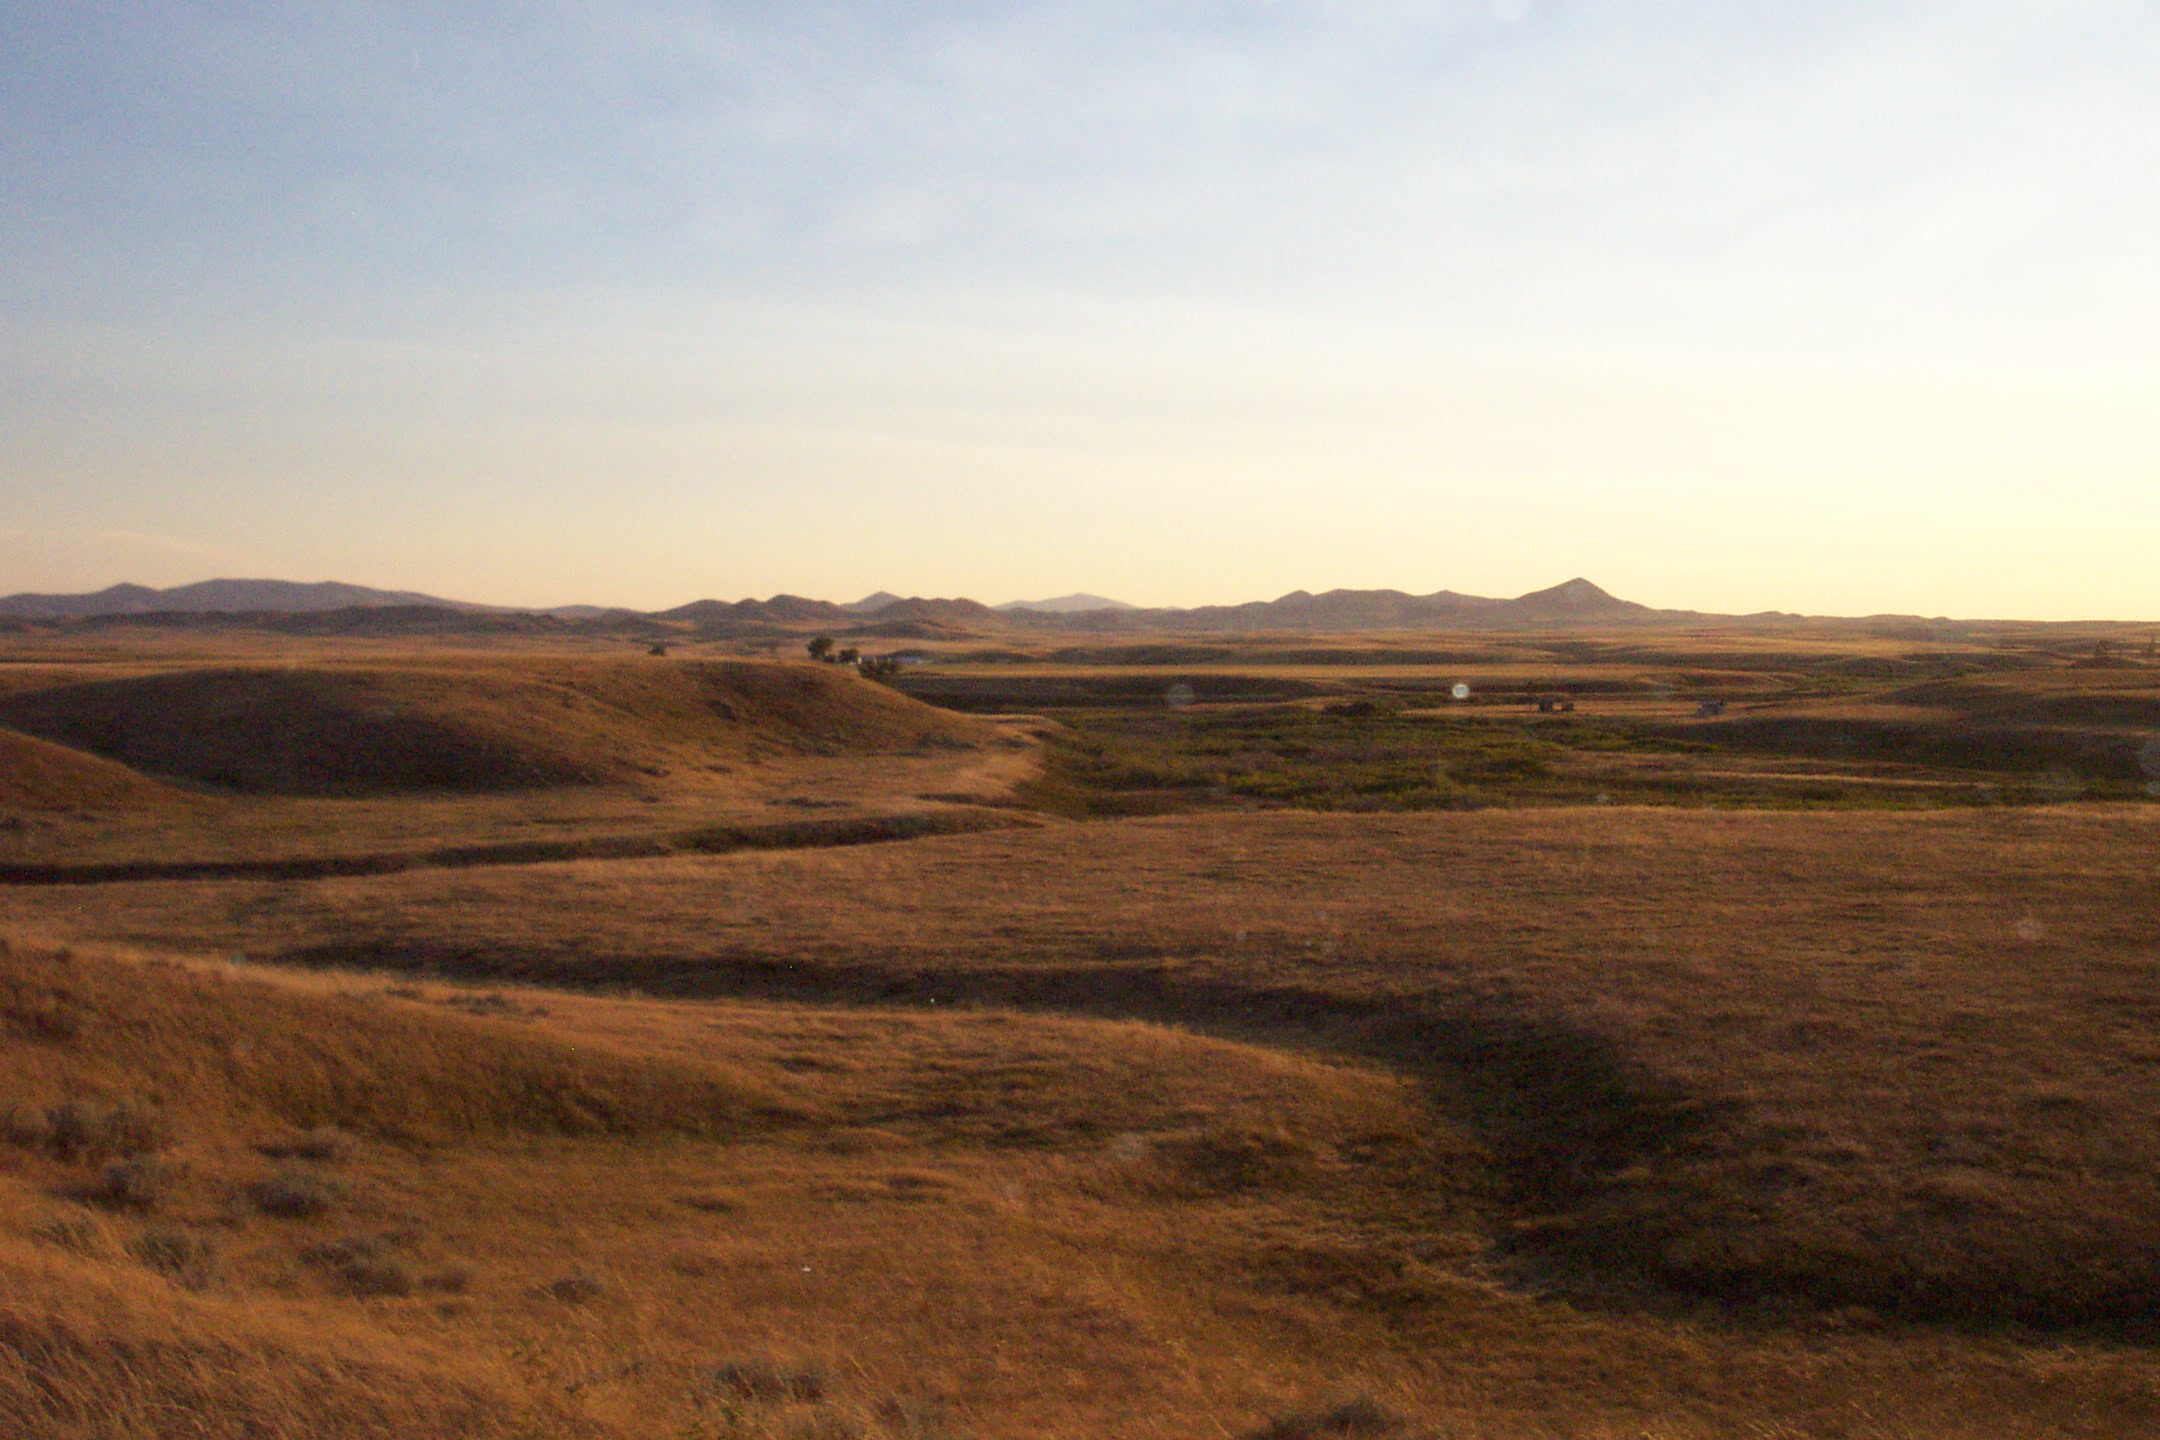 Nez Perce National Historical Park Wikipedia